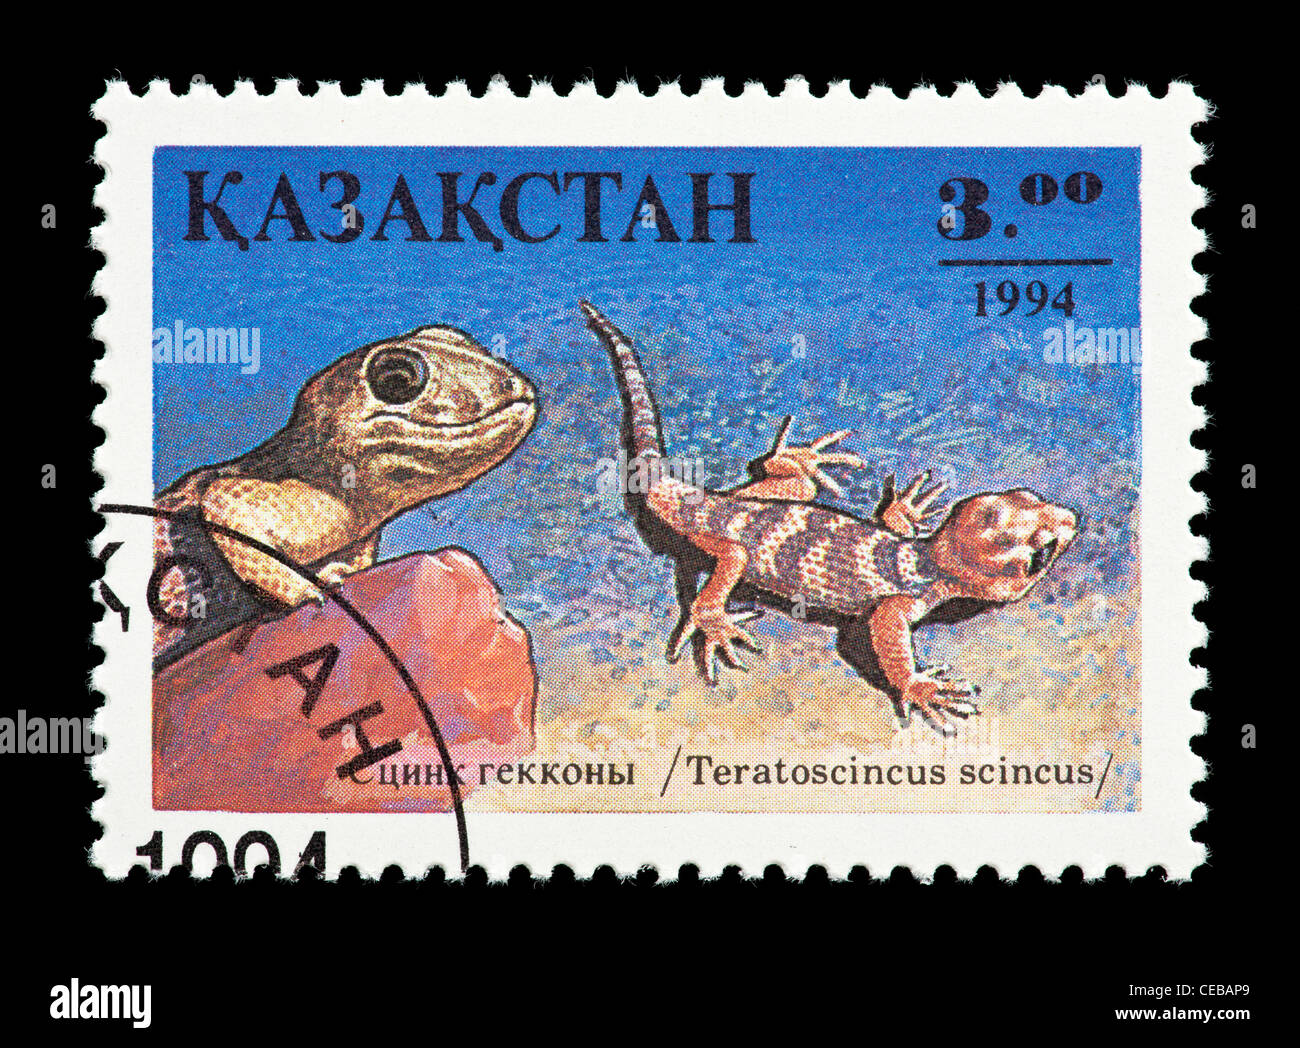 Postage stamp from Kazakhstan depicting a small lizard (Teratoscincus scincus) Stock Photo